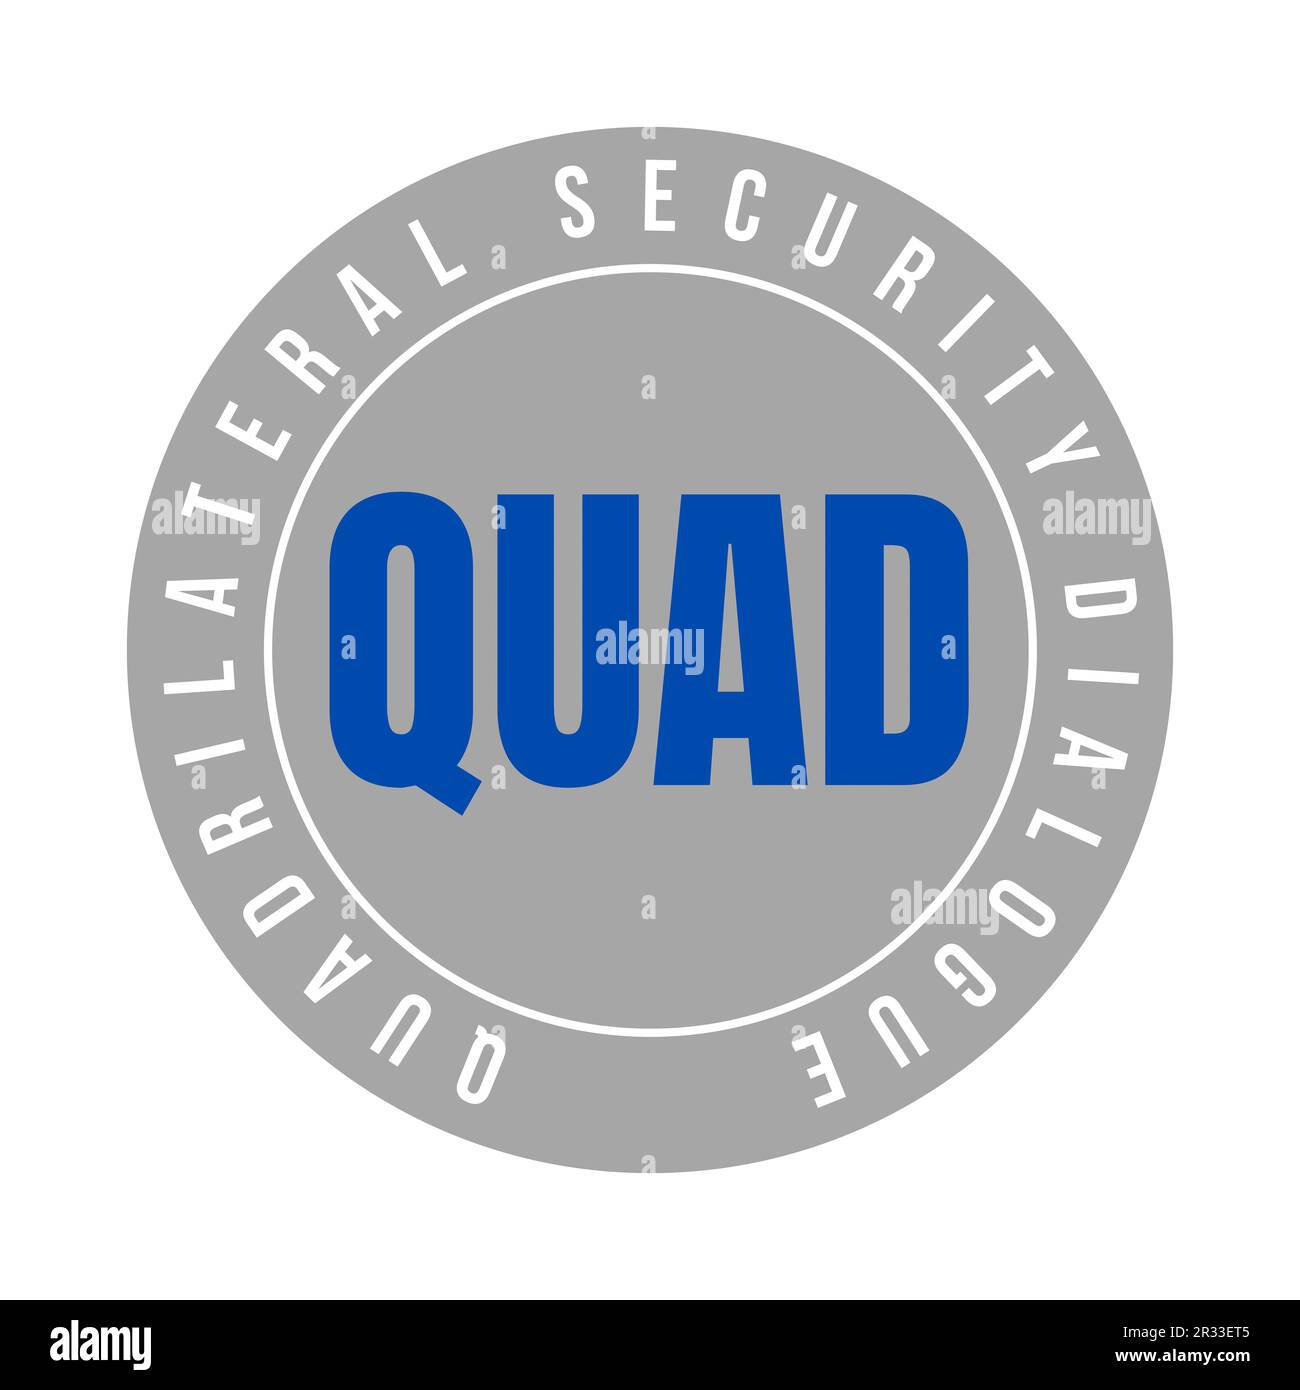 Quadrilateral security dialogue symbol icon Stock Photo